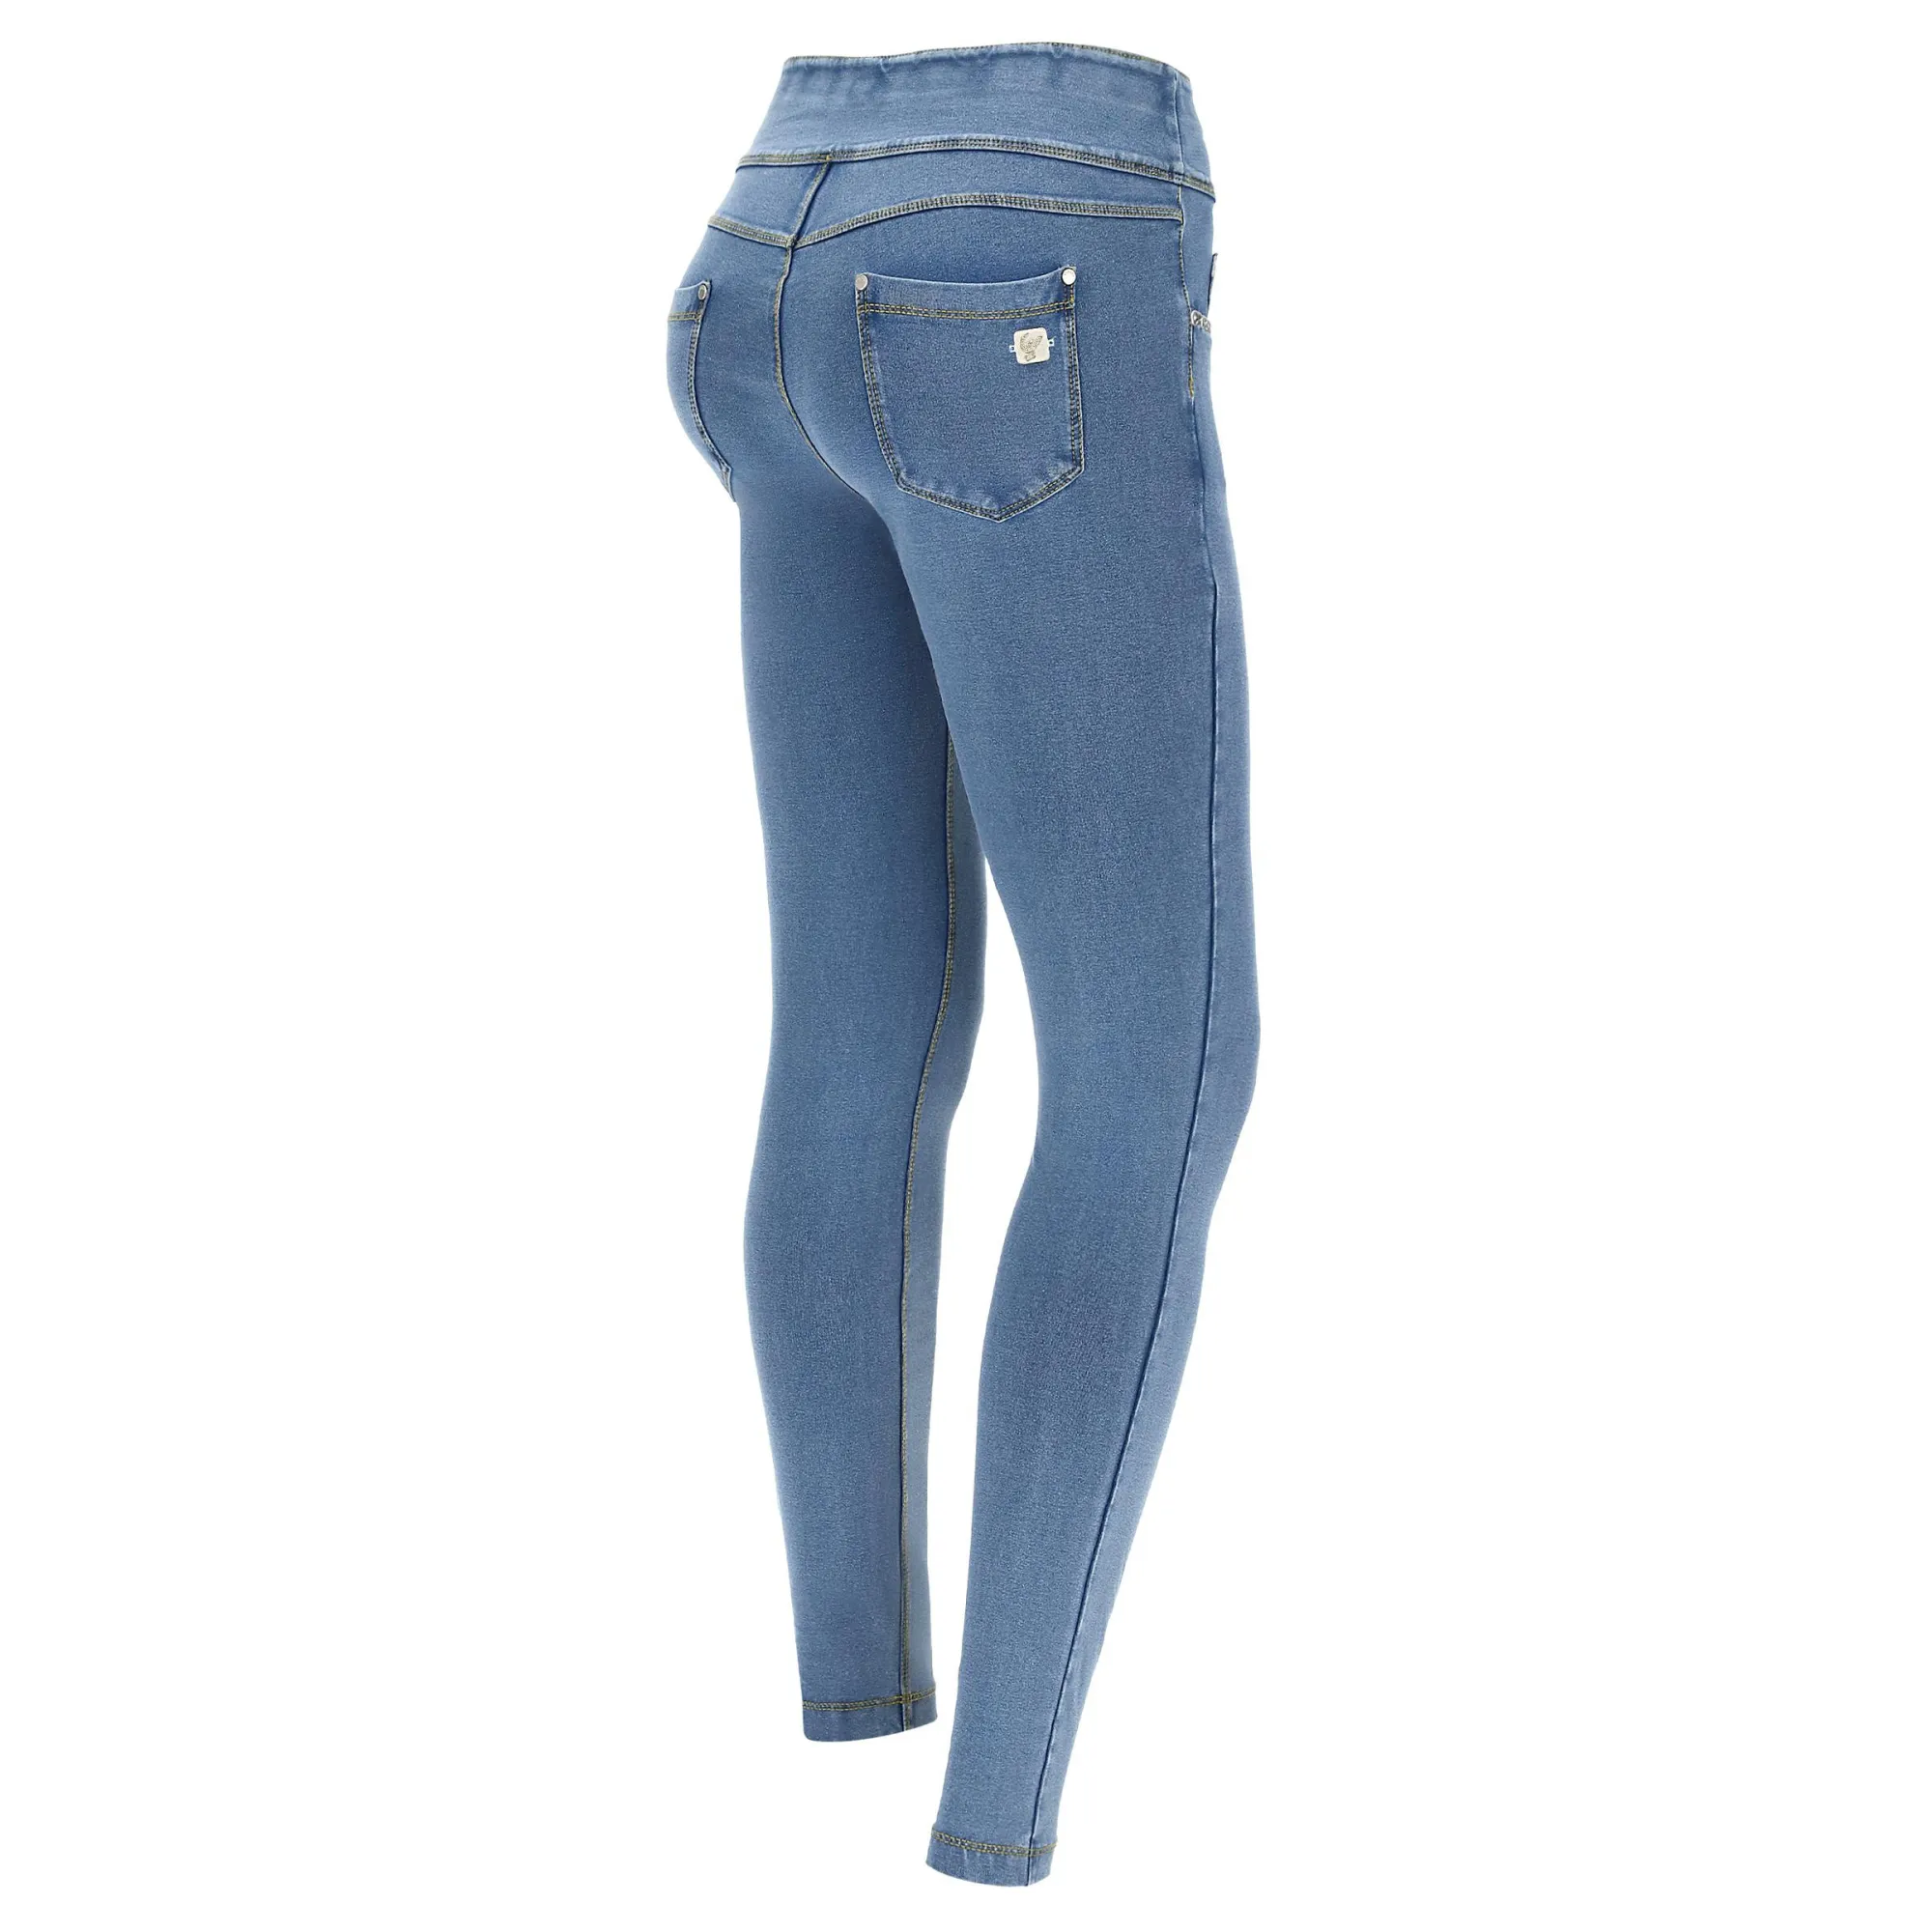 Freddy N.O.W.® Yoga Damen Comfort Jeans - Mid Waist Skinny - Hellblau - Gelbe Nähte